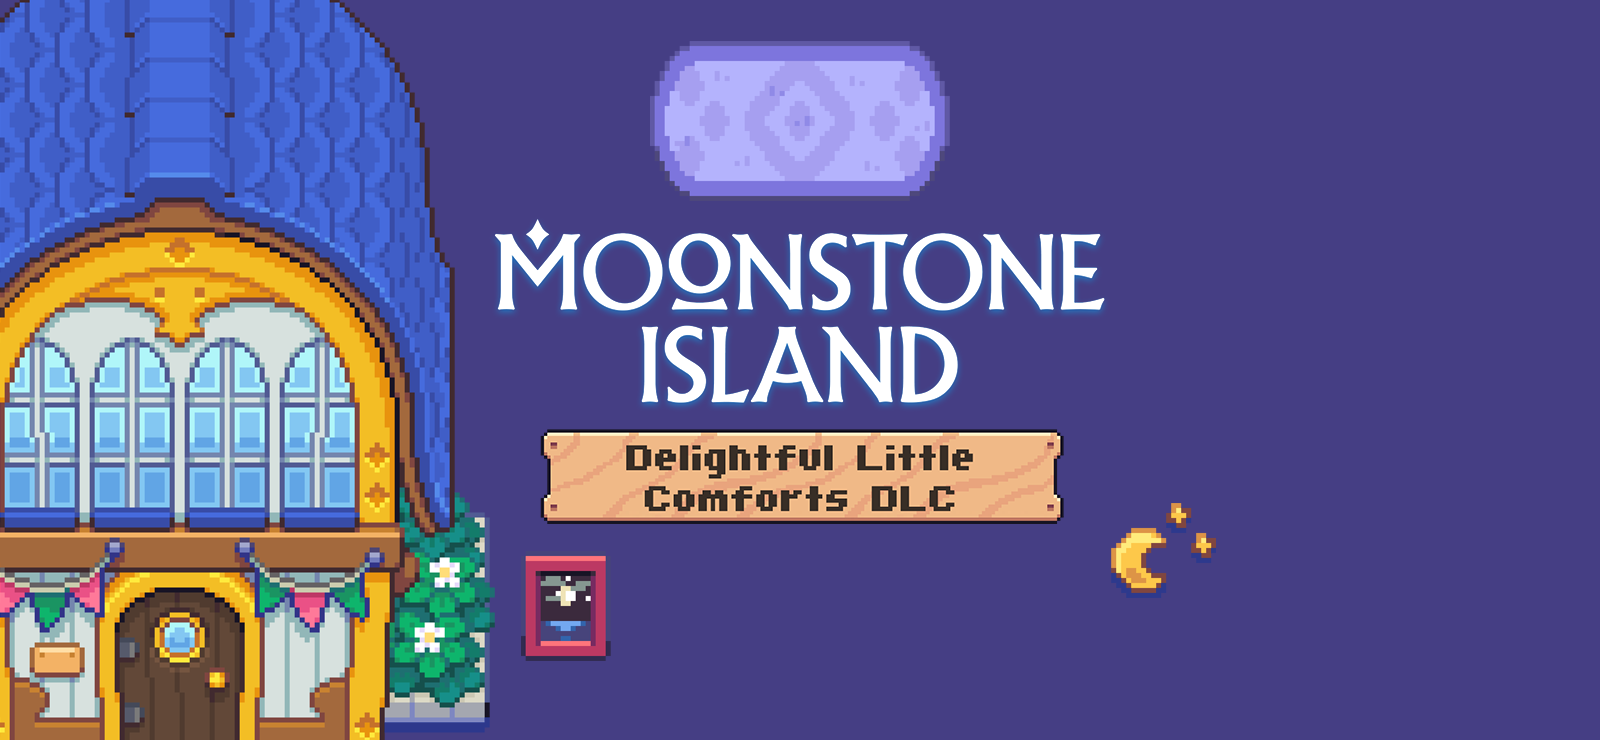 Moonstone Island Delightful Little Comforts DLC Pack